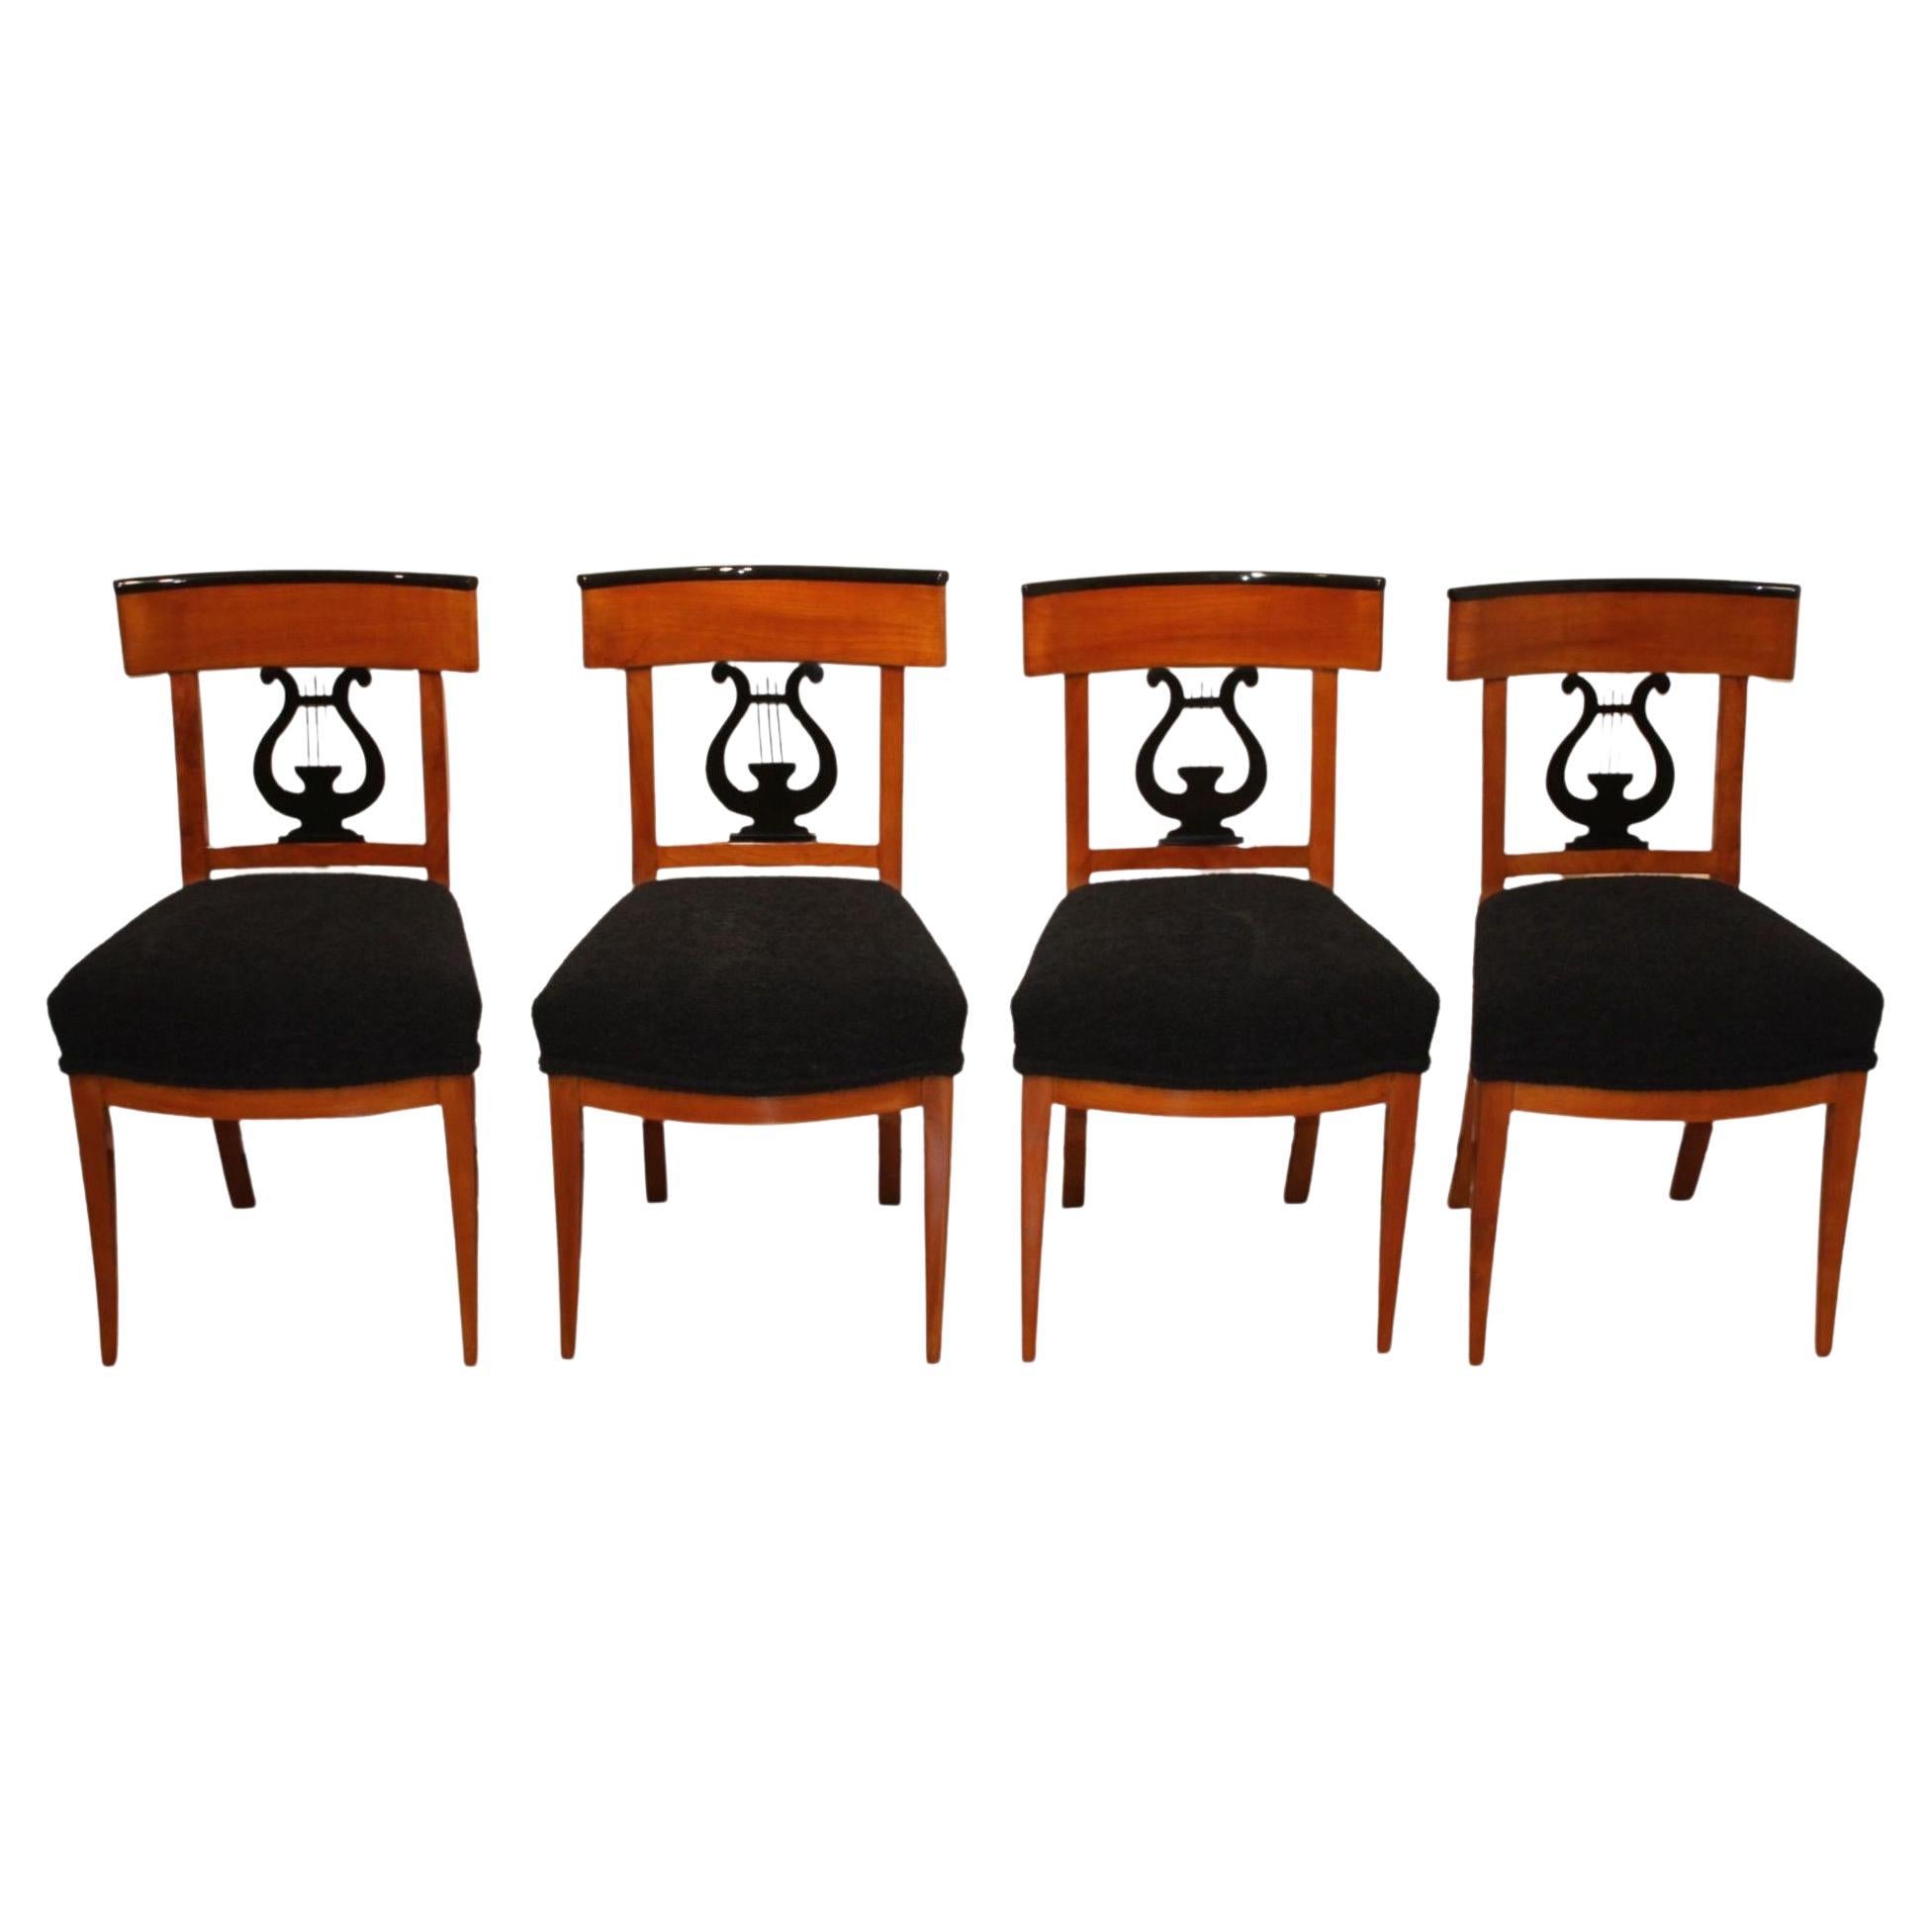 Set of Four Biedermeier Chairs, Cherry Wood, South Germany circa 1830